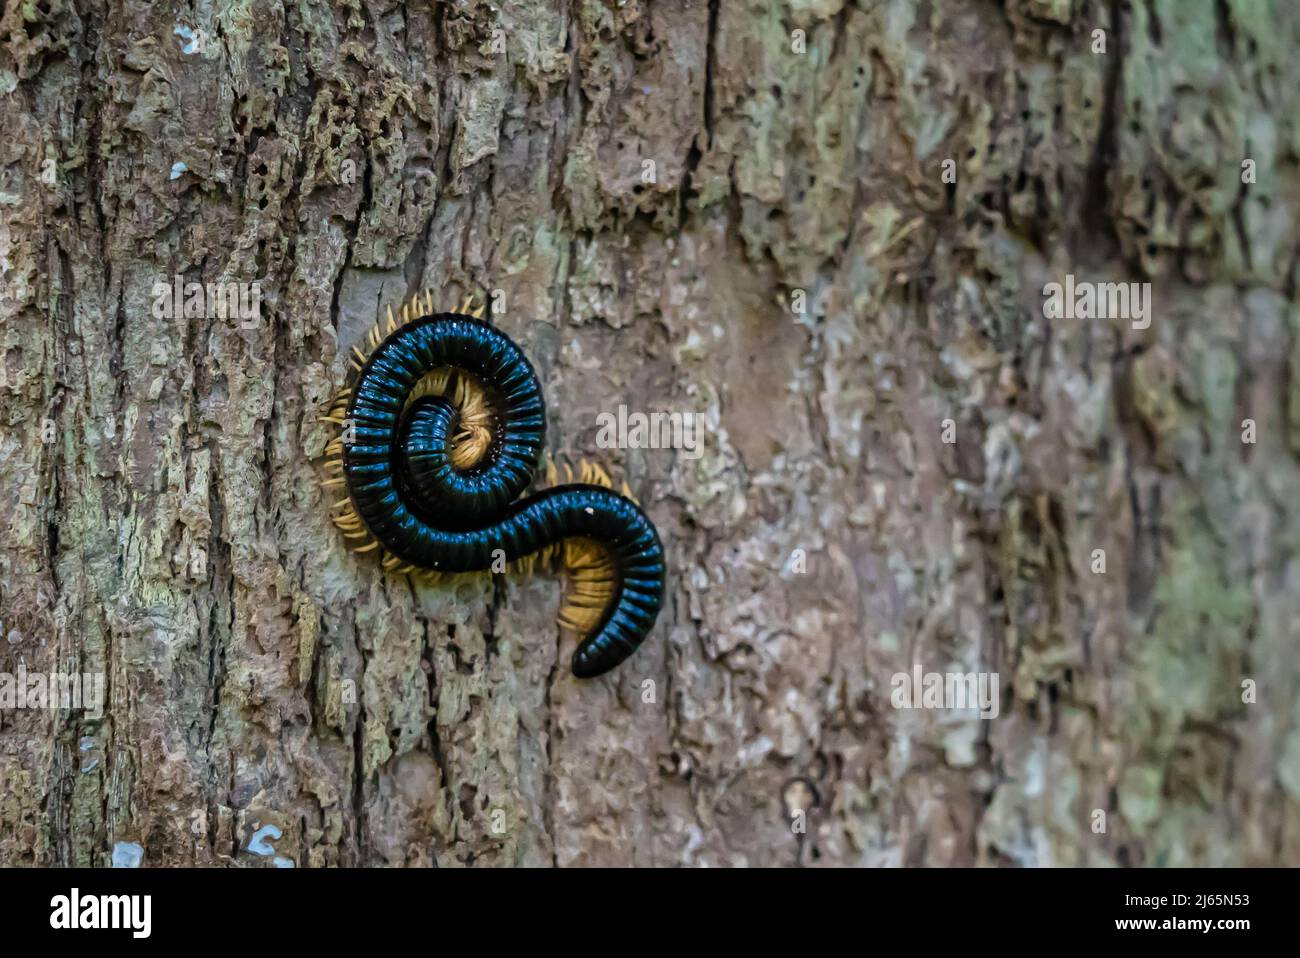 Giant millipede on a tree bark, Zanzibar, Tanzania Stock Photo